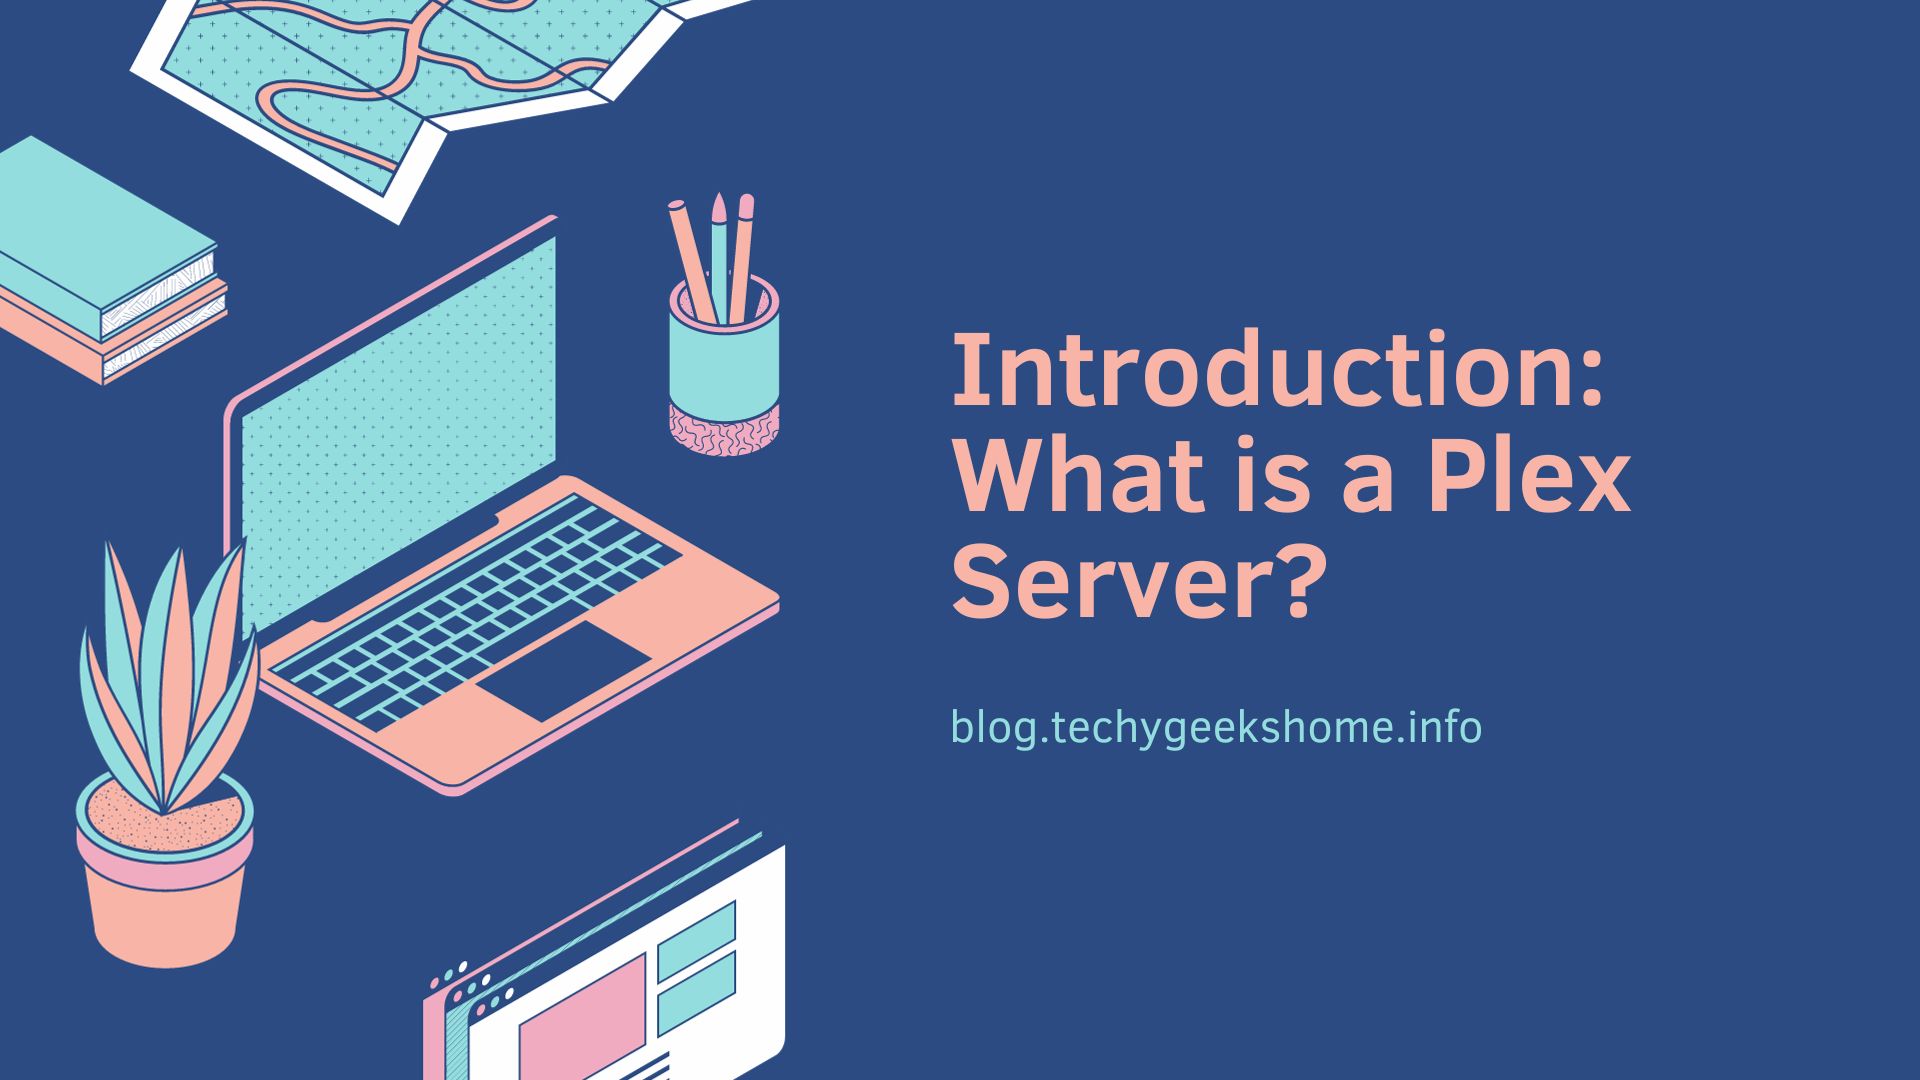 Introduction: What is a Plex Server?